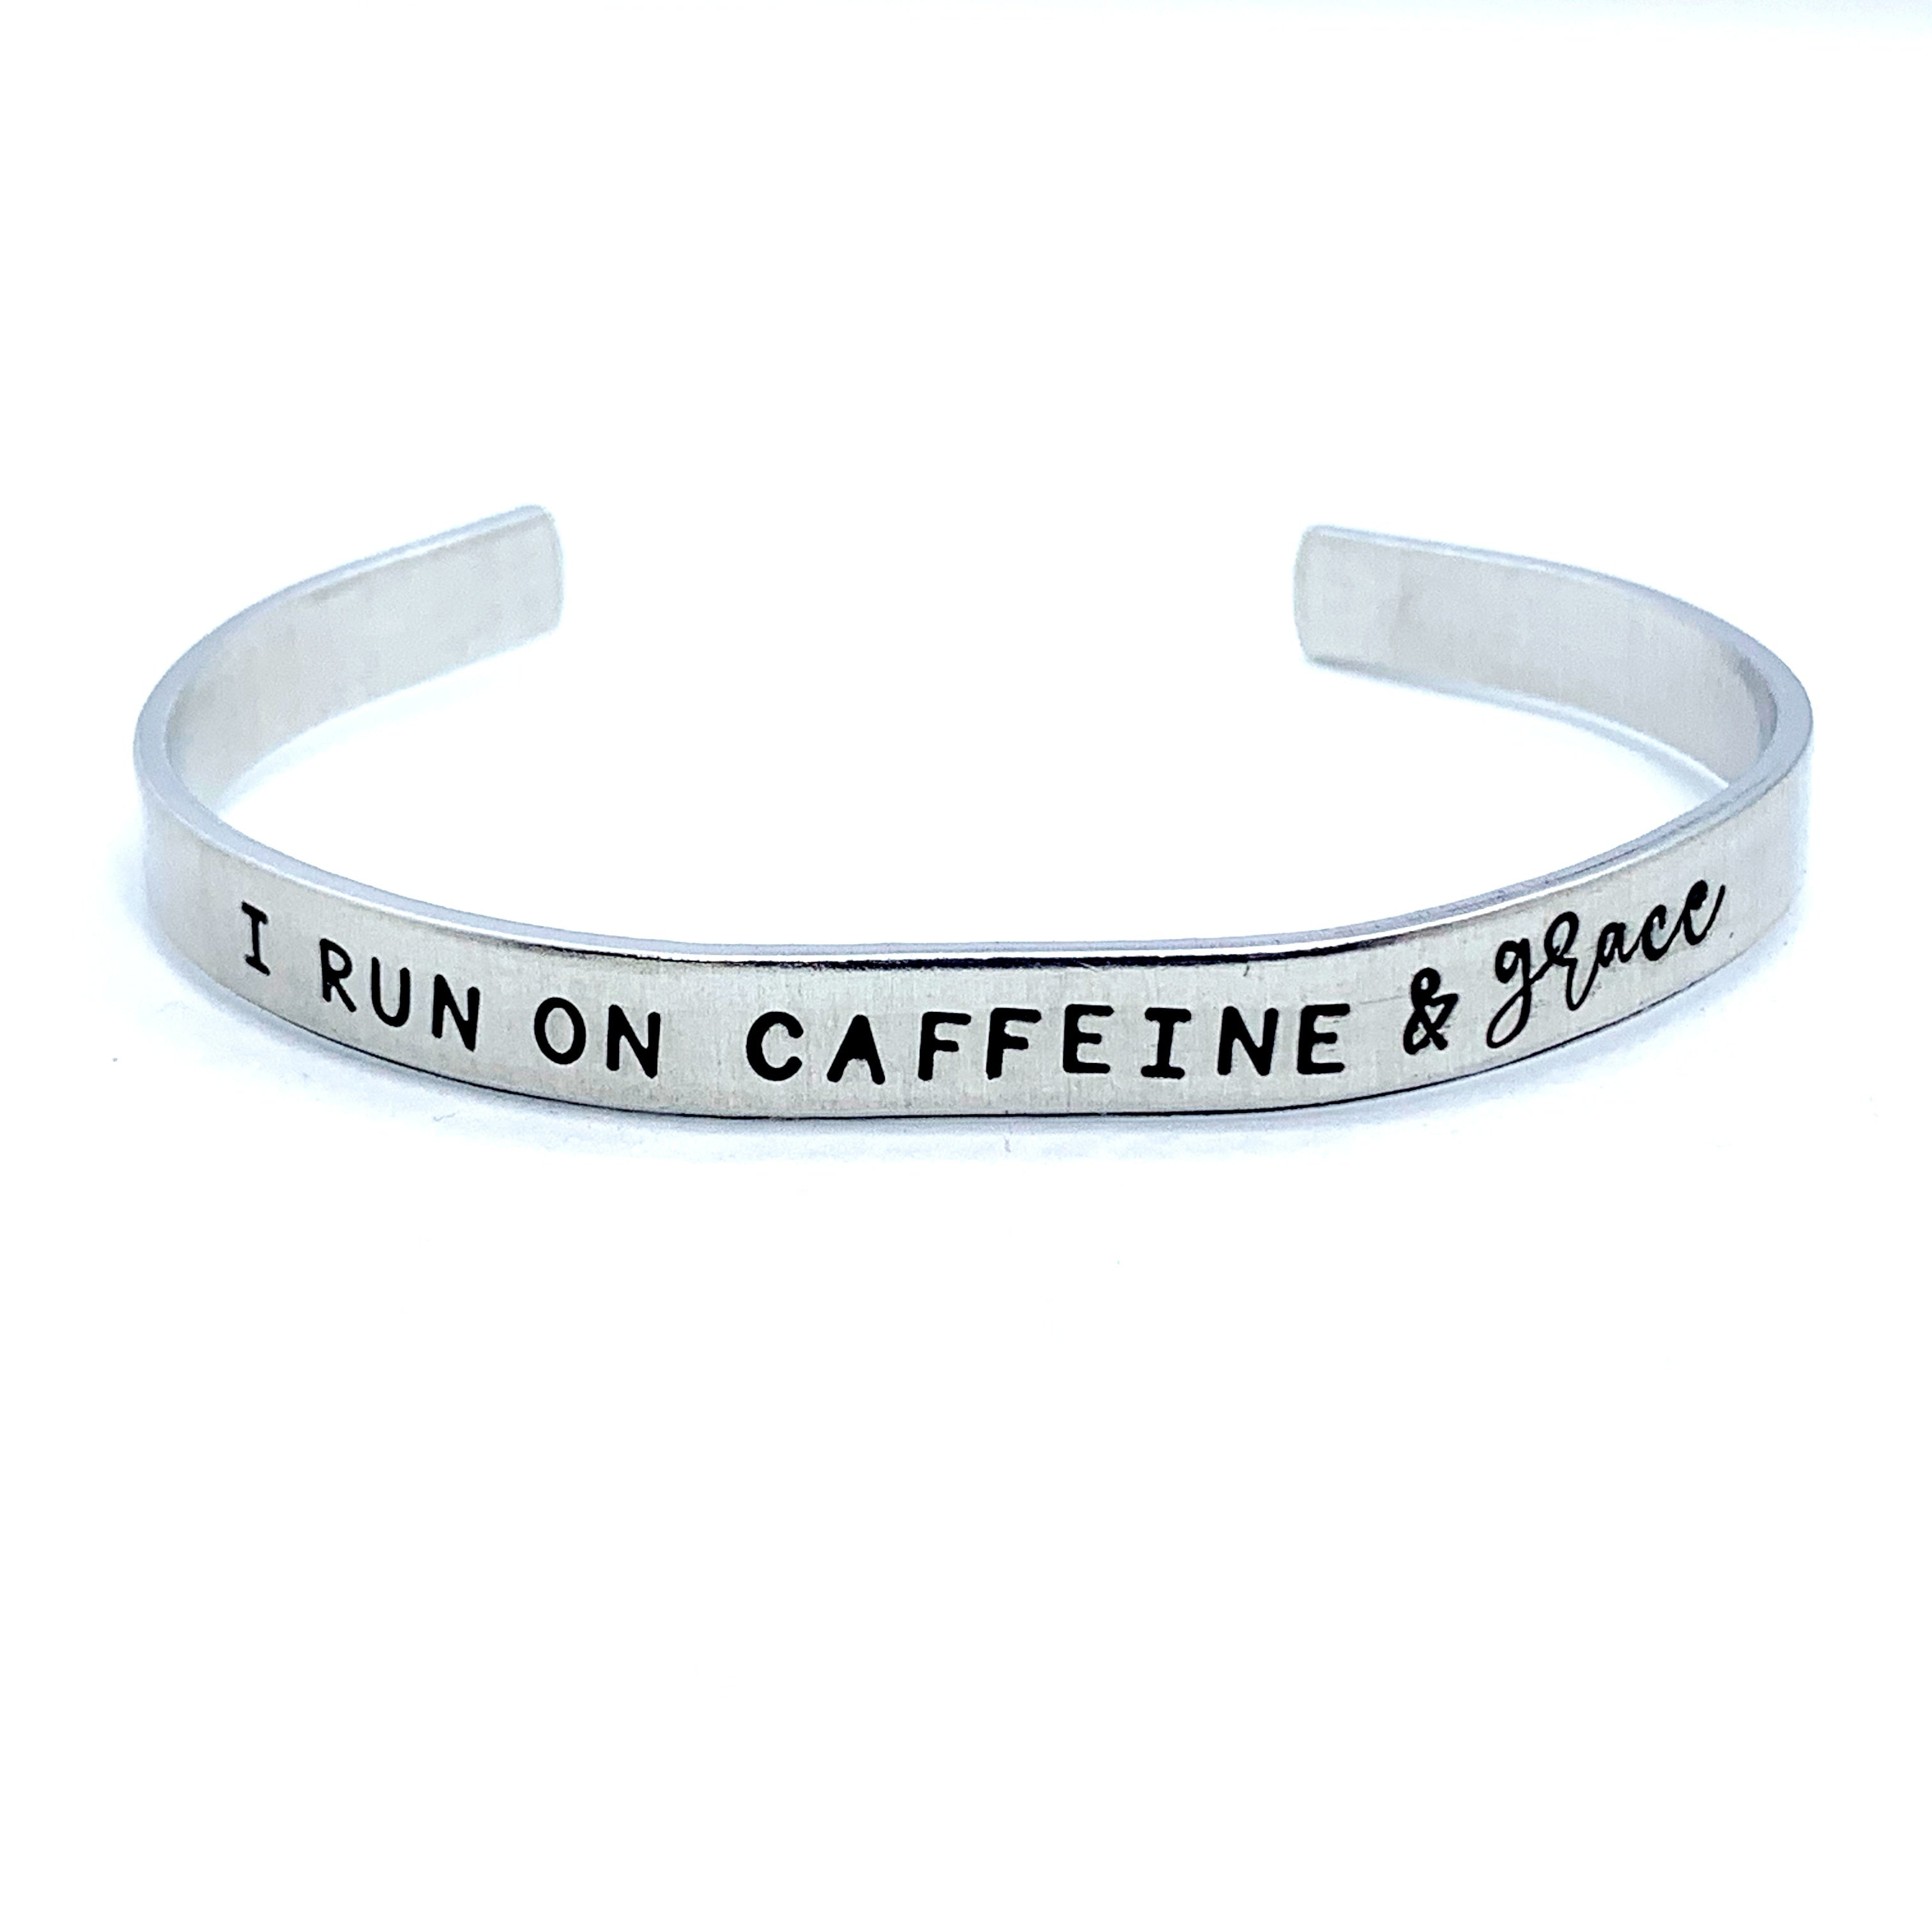 ¼ inch Aluminum Cuff - I Run On Caffeine & Grace